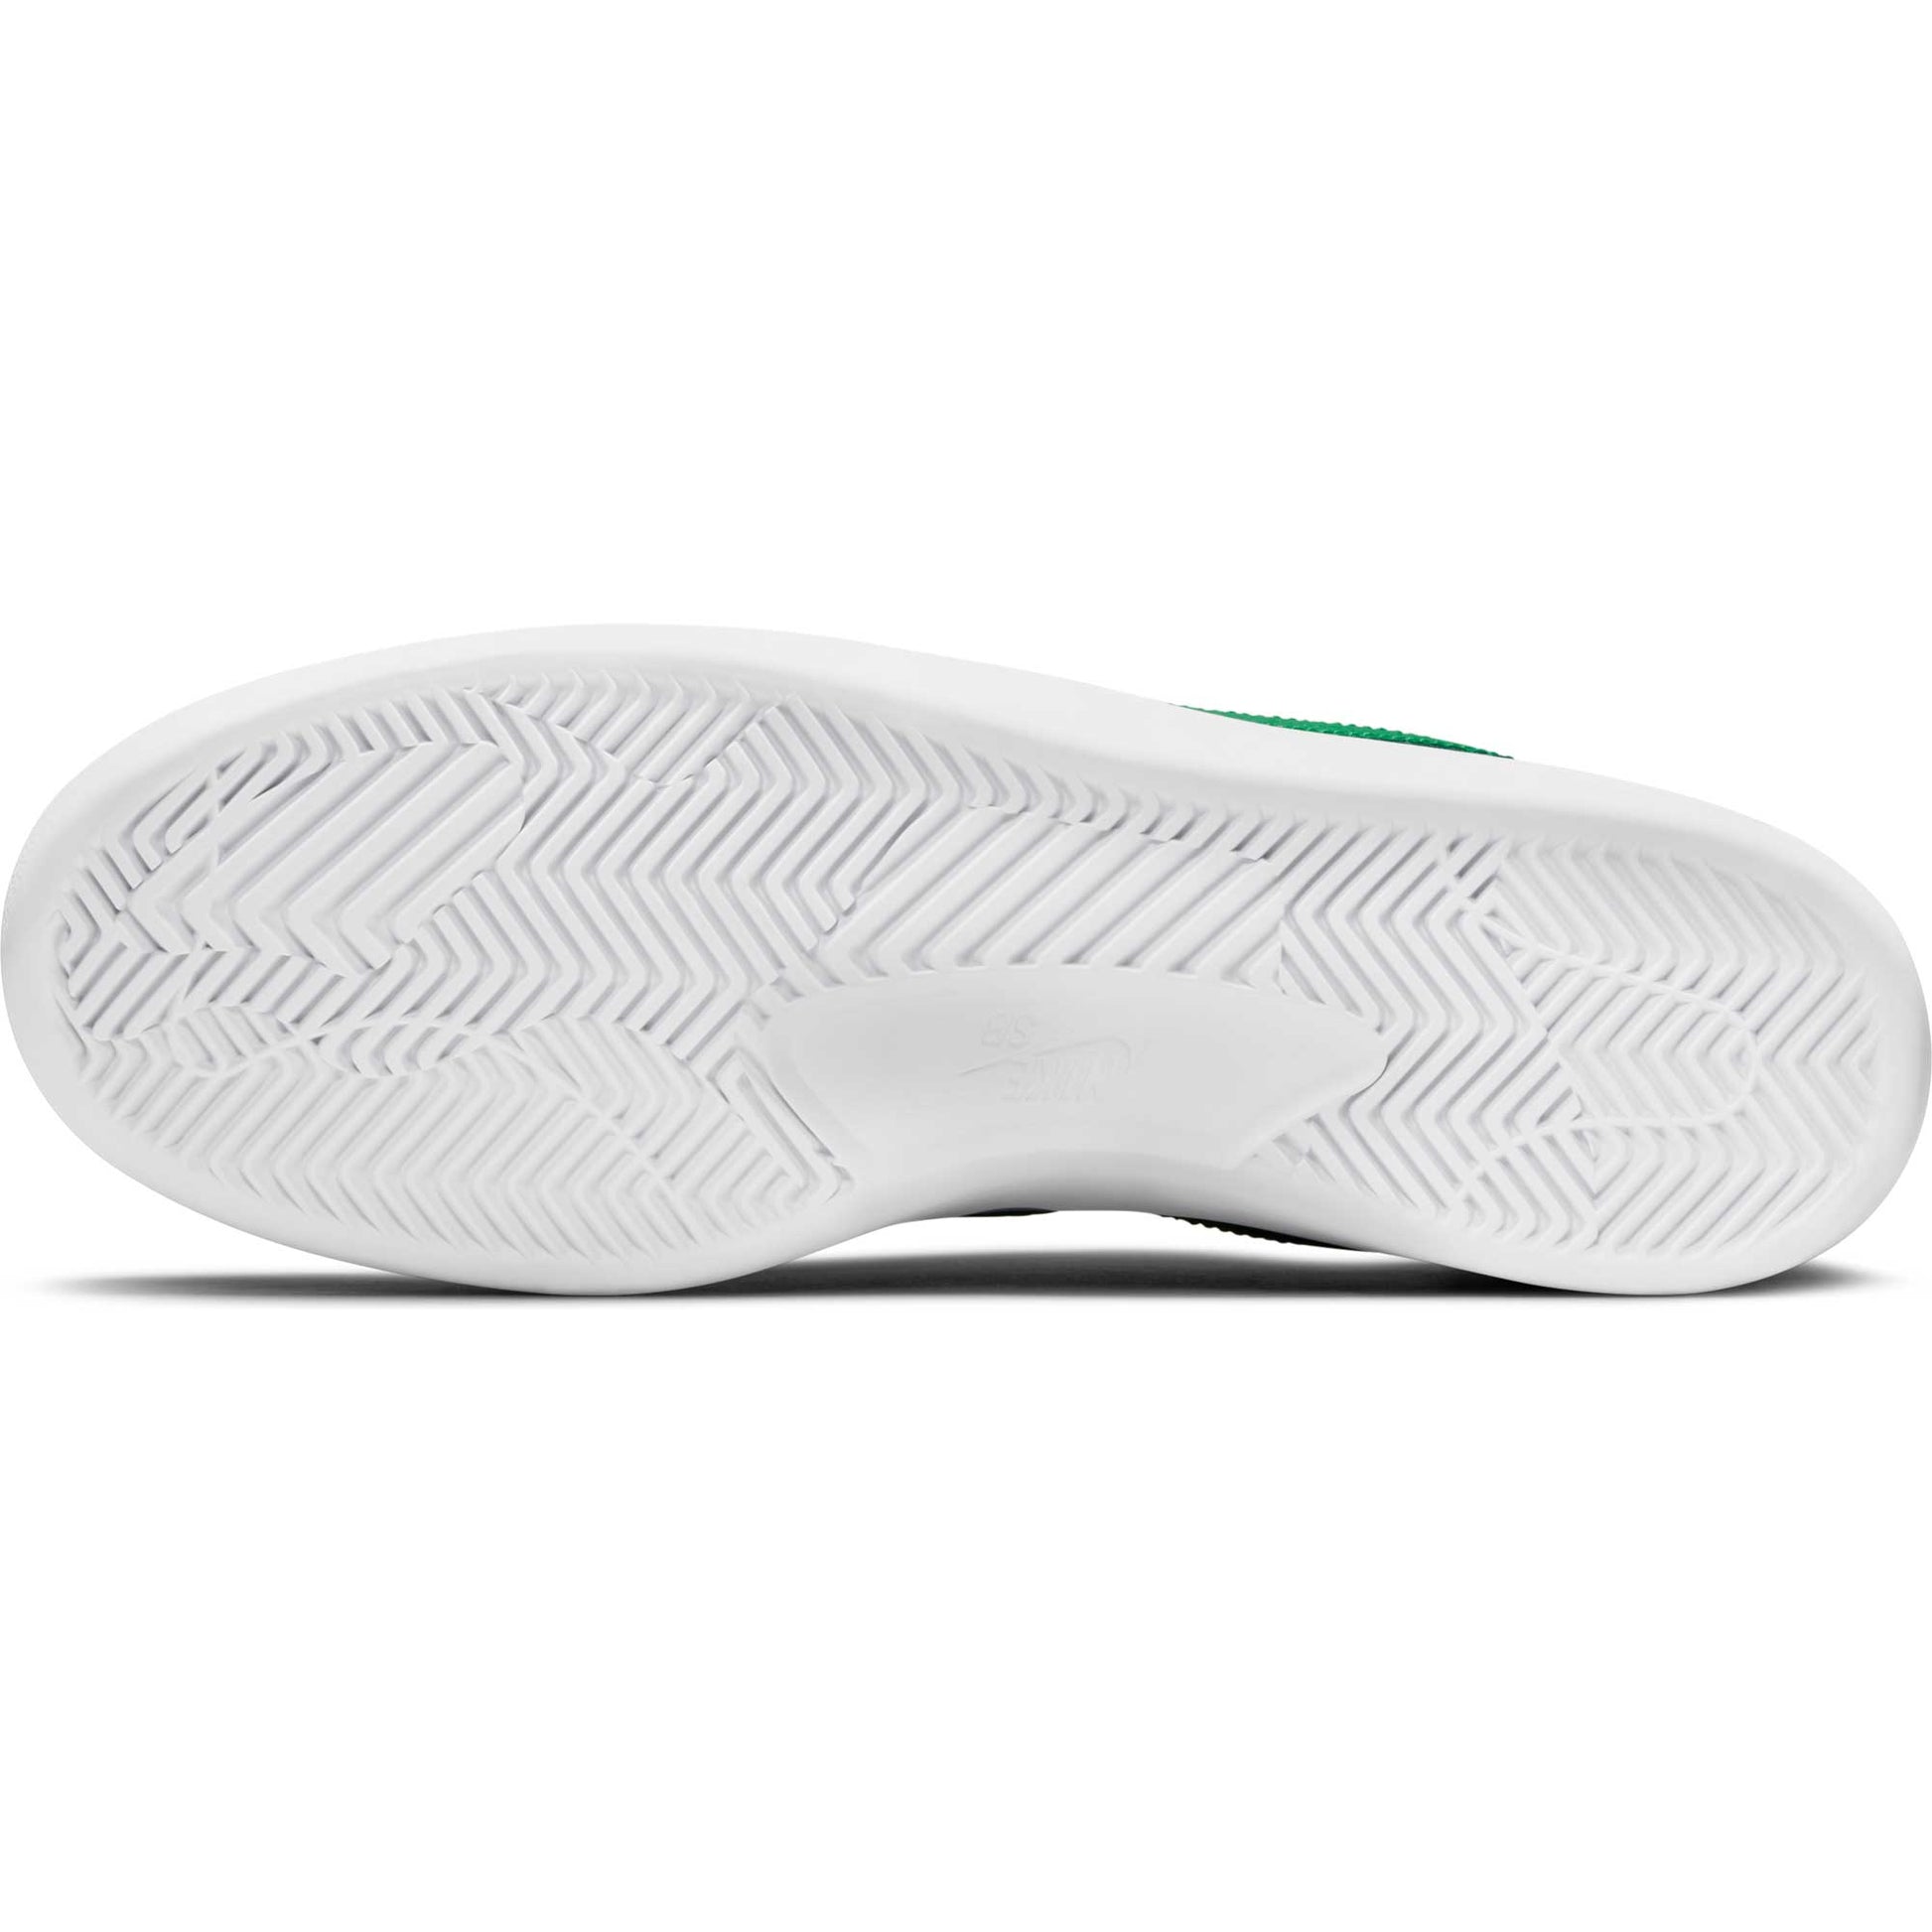 Nike SB Bruin React, white/lucky green-white-lucky green - Tiki Room Skateboards - 8